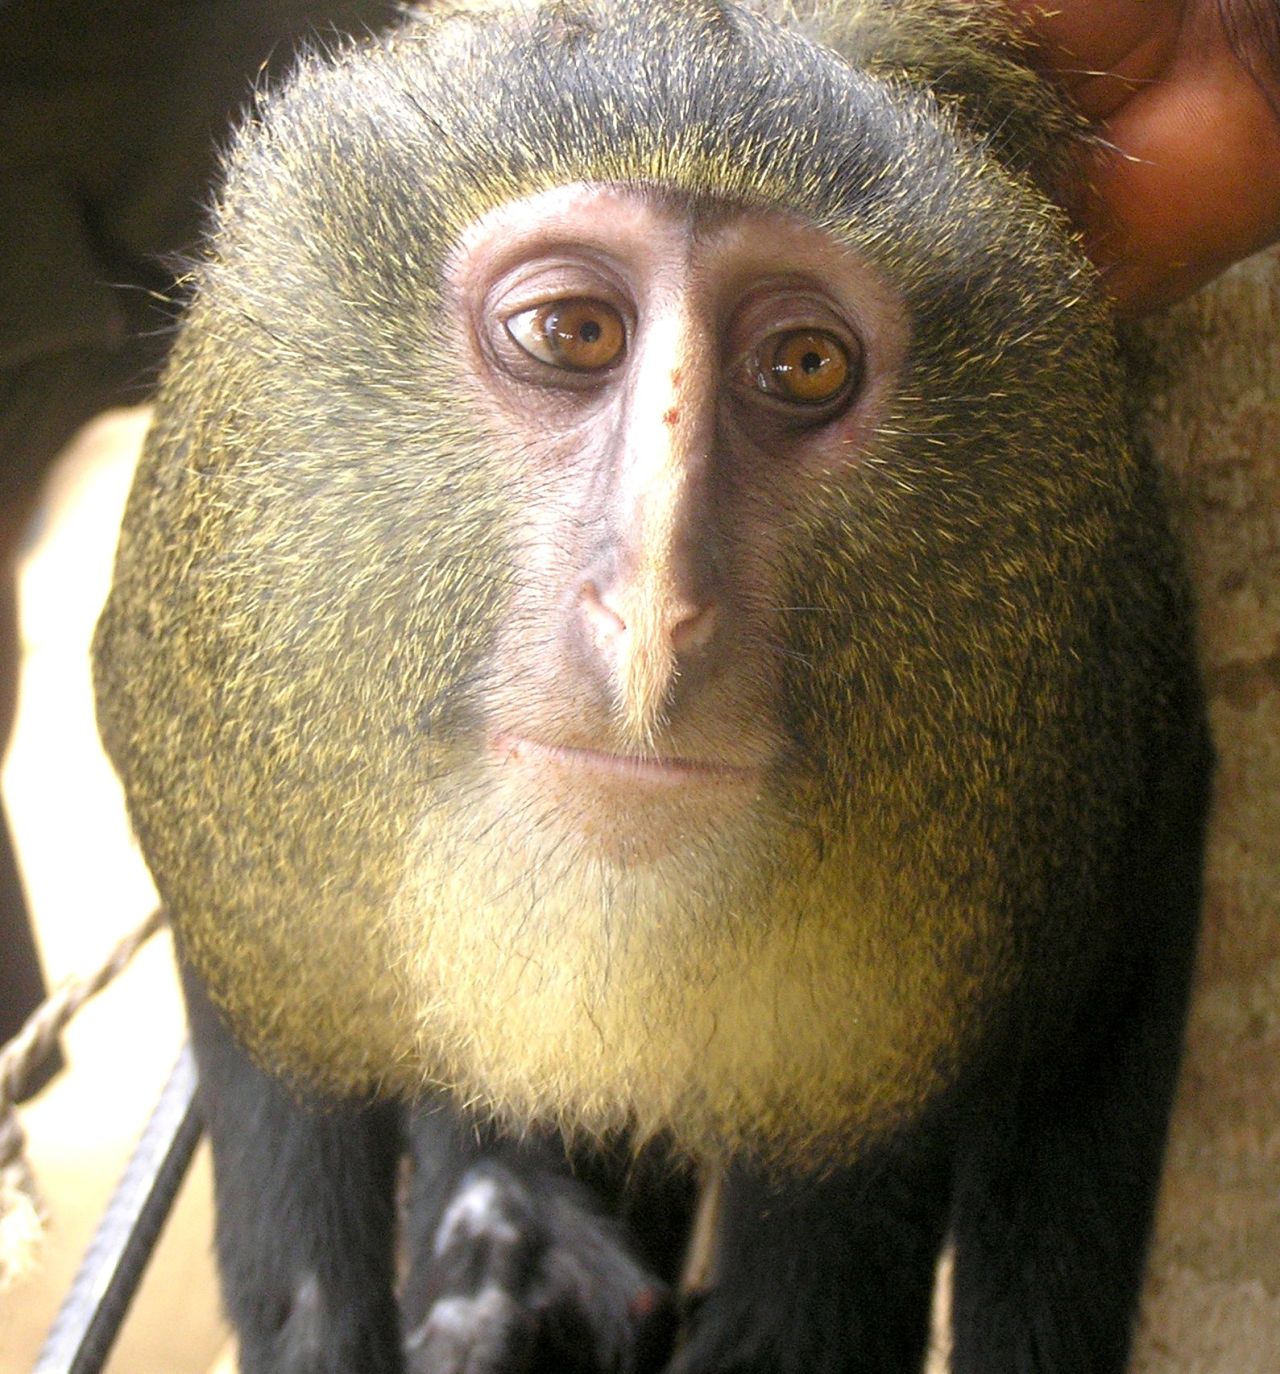 New monkey discovered | CNN